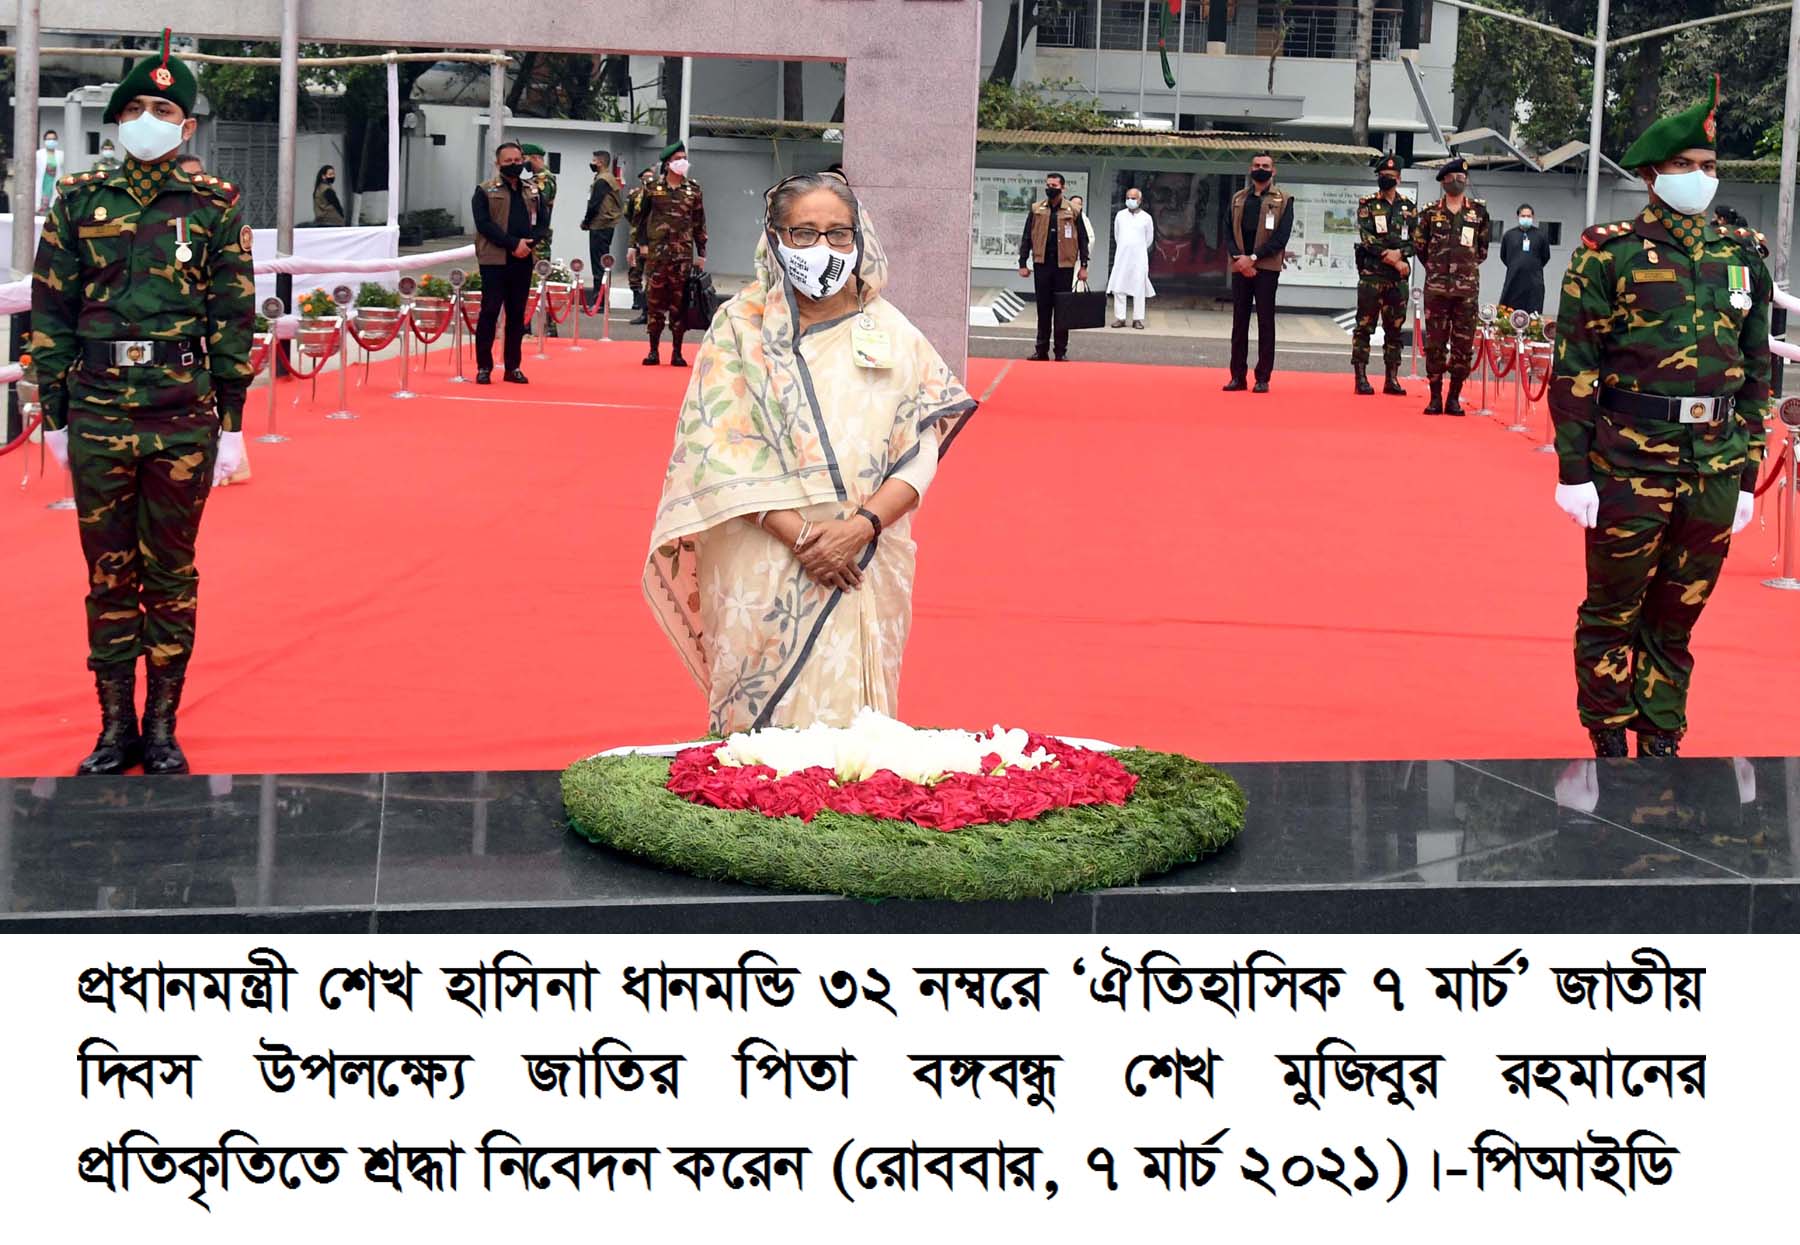 Bangladesh observes March 7